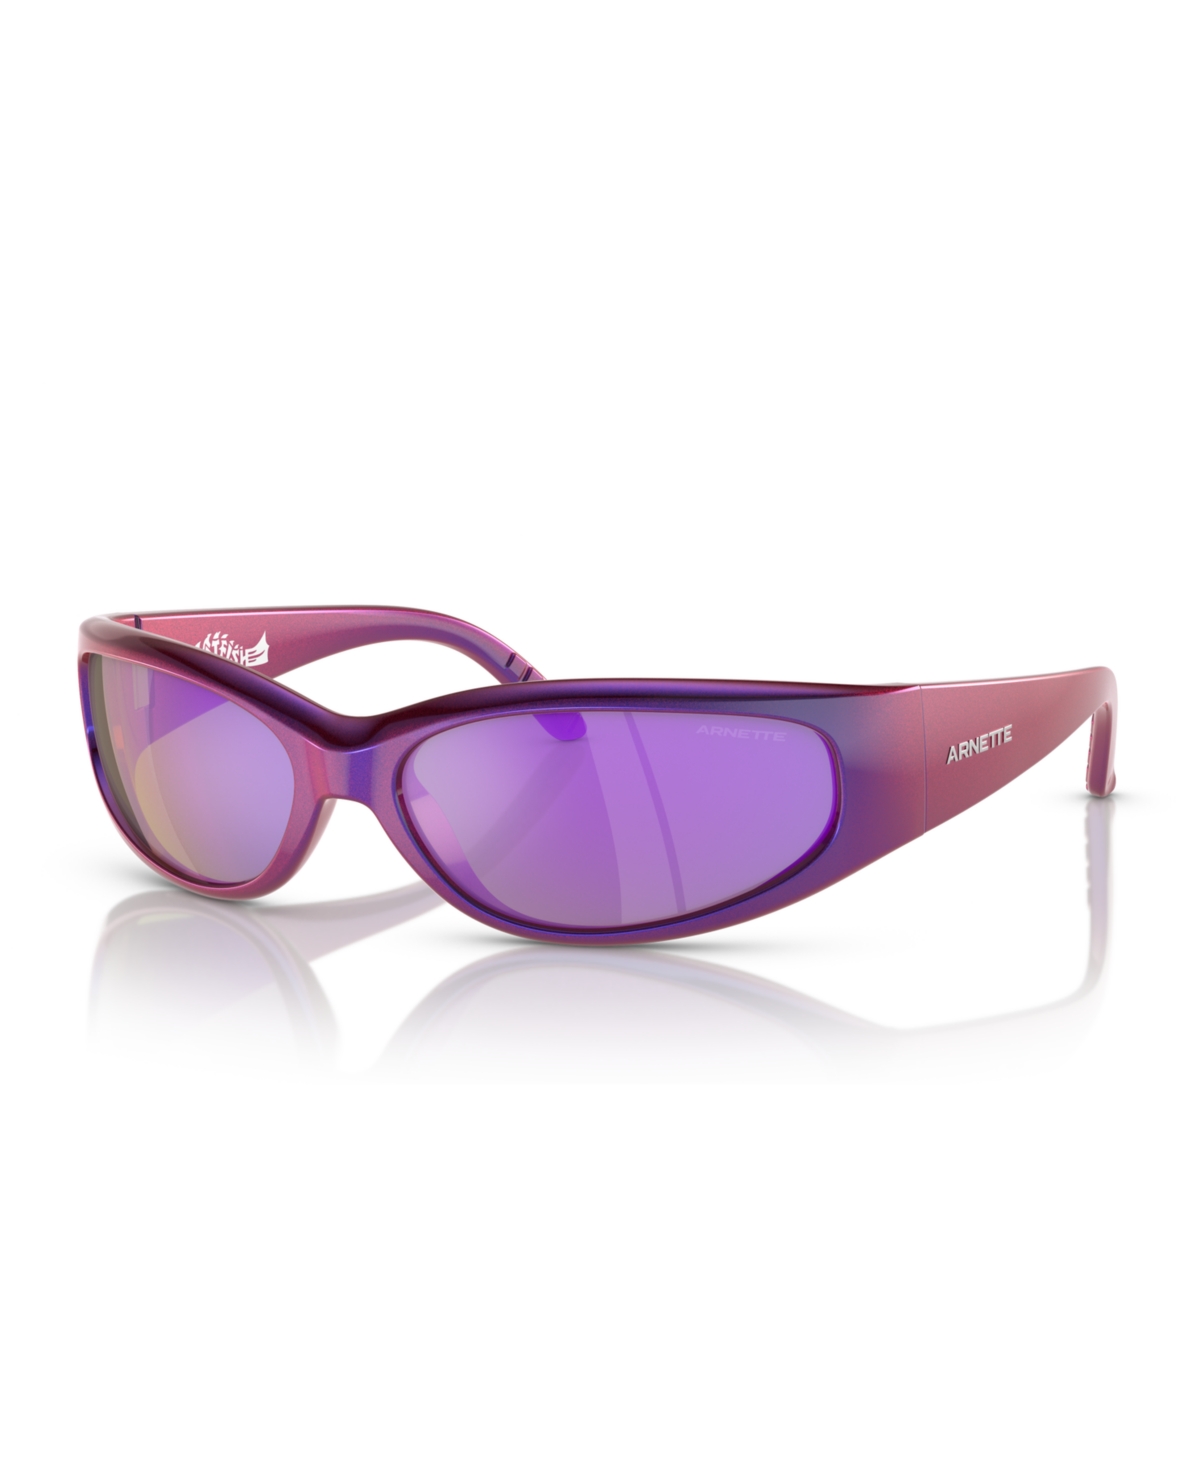 Men's Catfish Sunglasses, Mirror AN4302 - Iridescent Blue, Violet